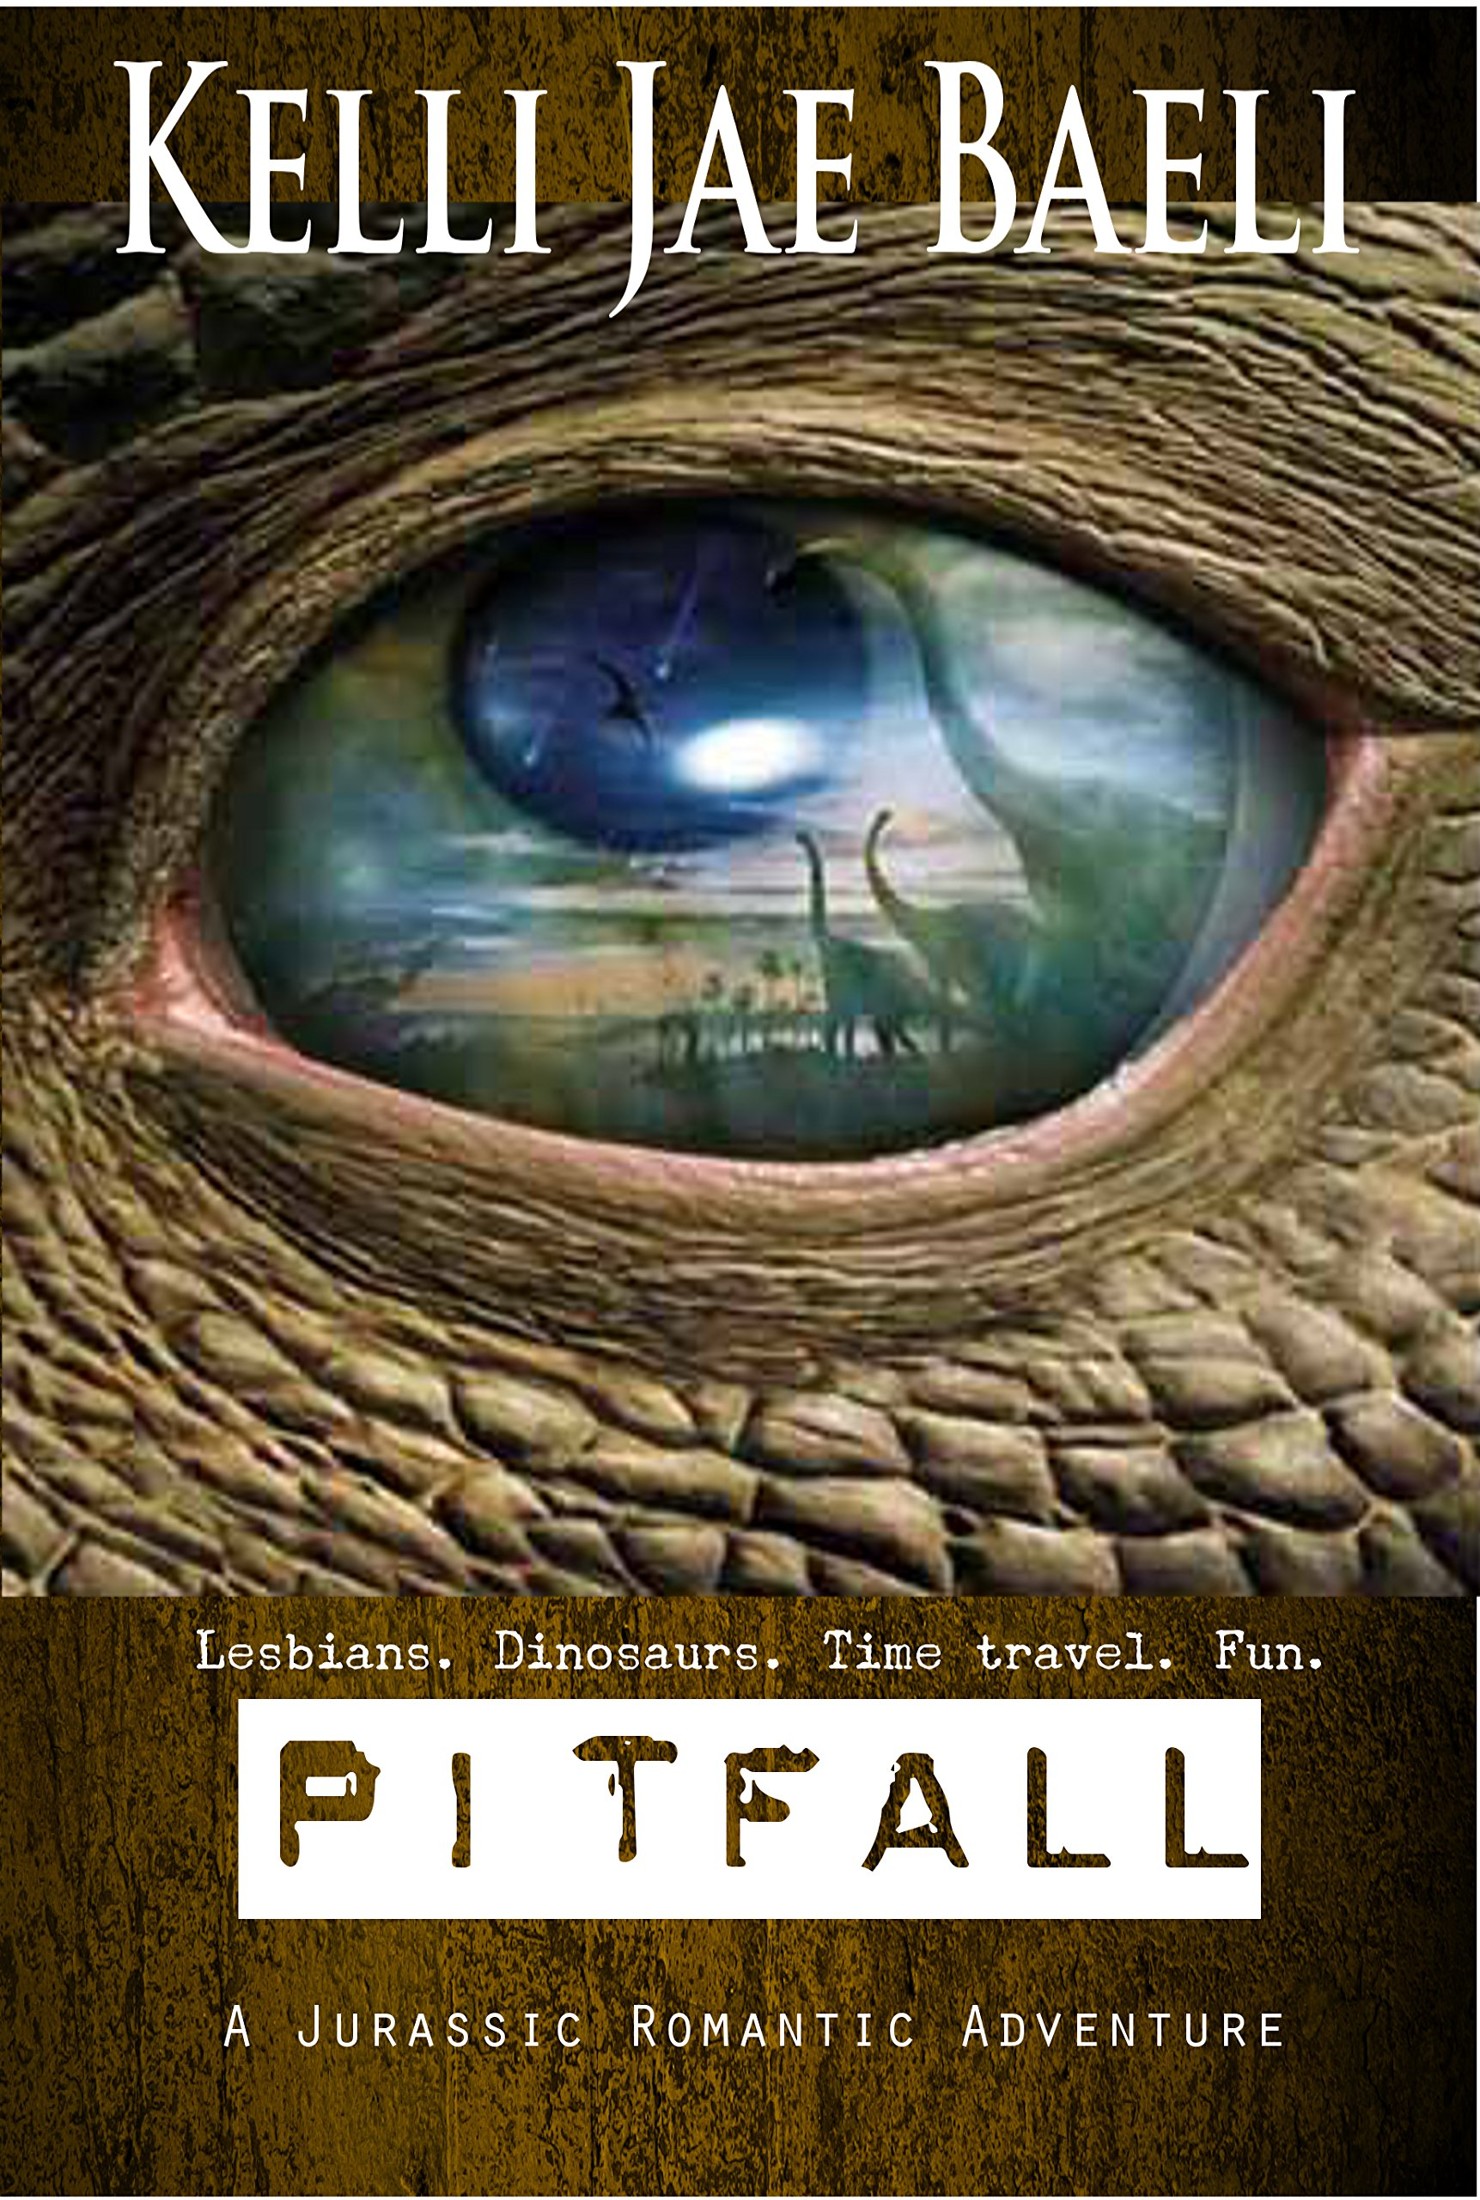 Pitfall (A Jurassic Romantic Adventure): Lesbians. Dinosaurs. Time-Travel. Fun.